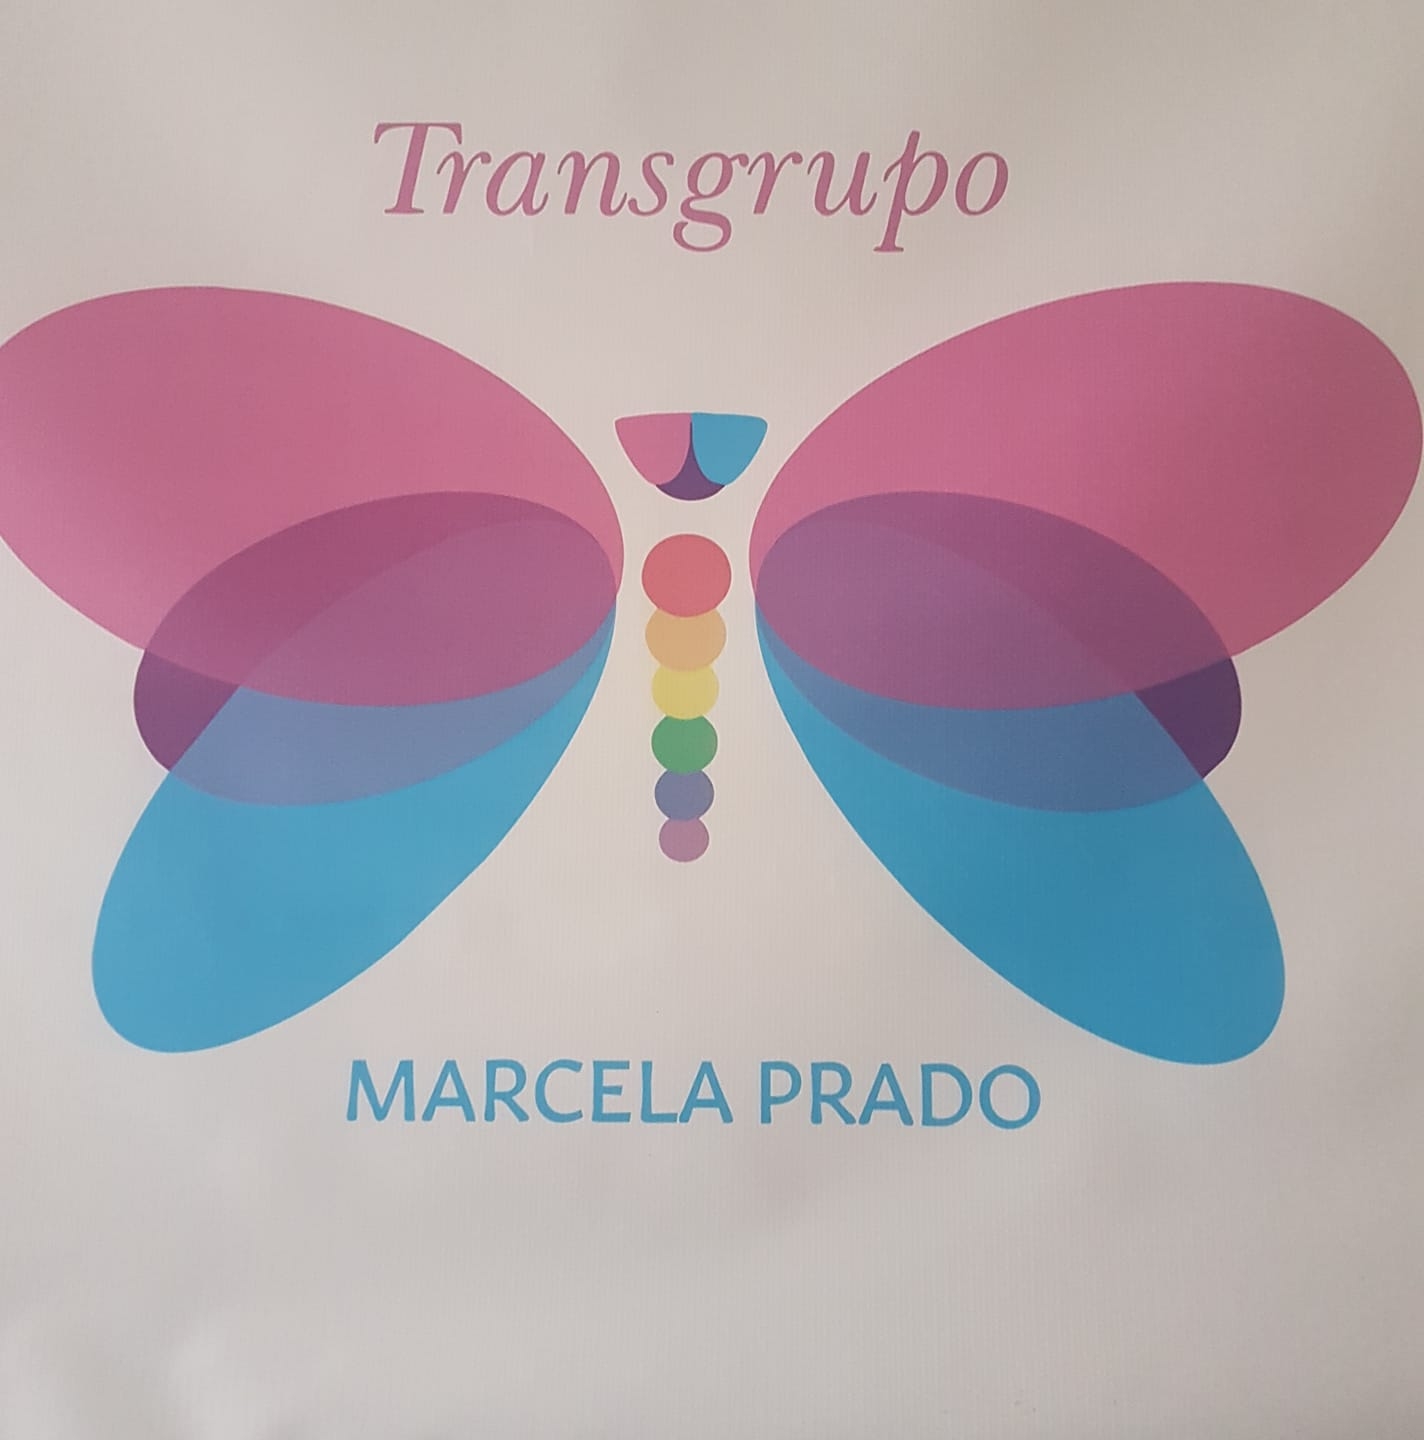 Transgrupo Marcela Prado  